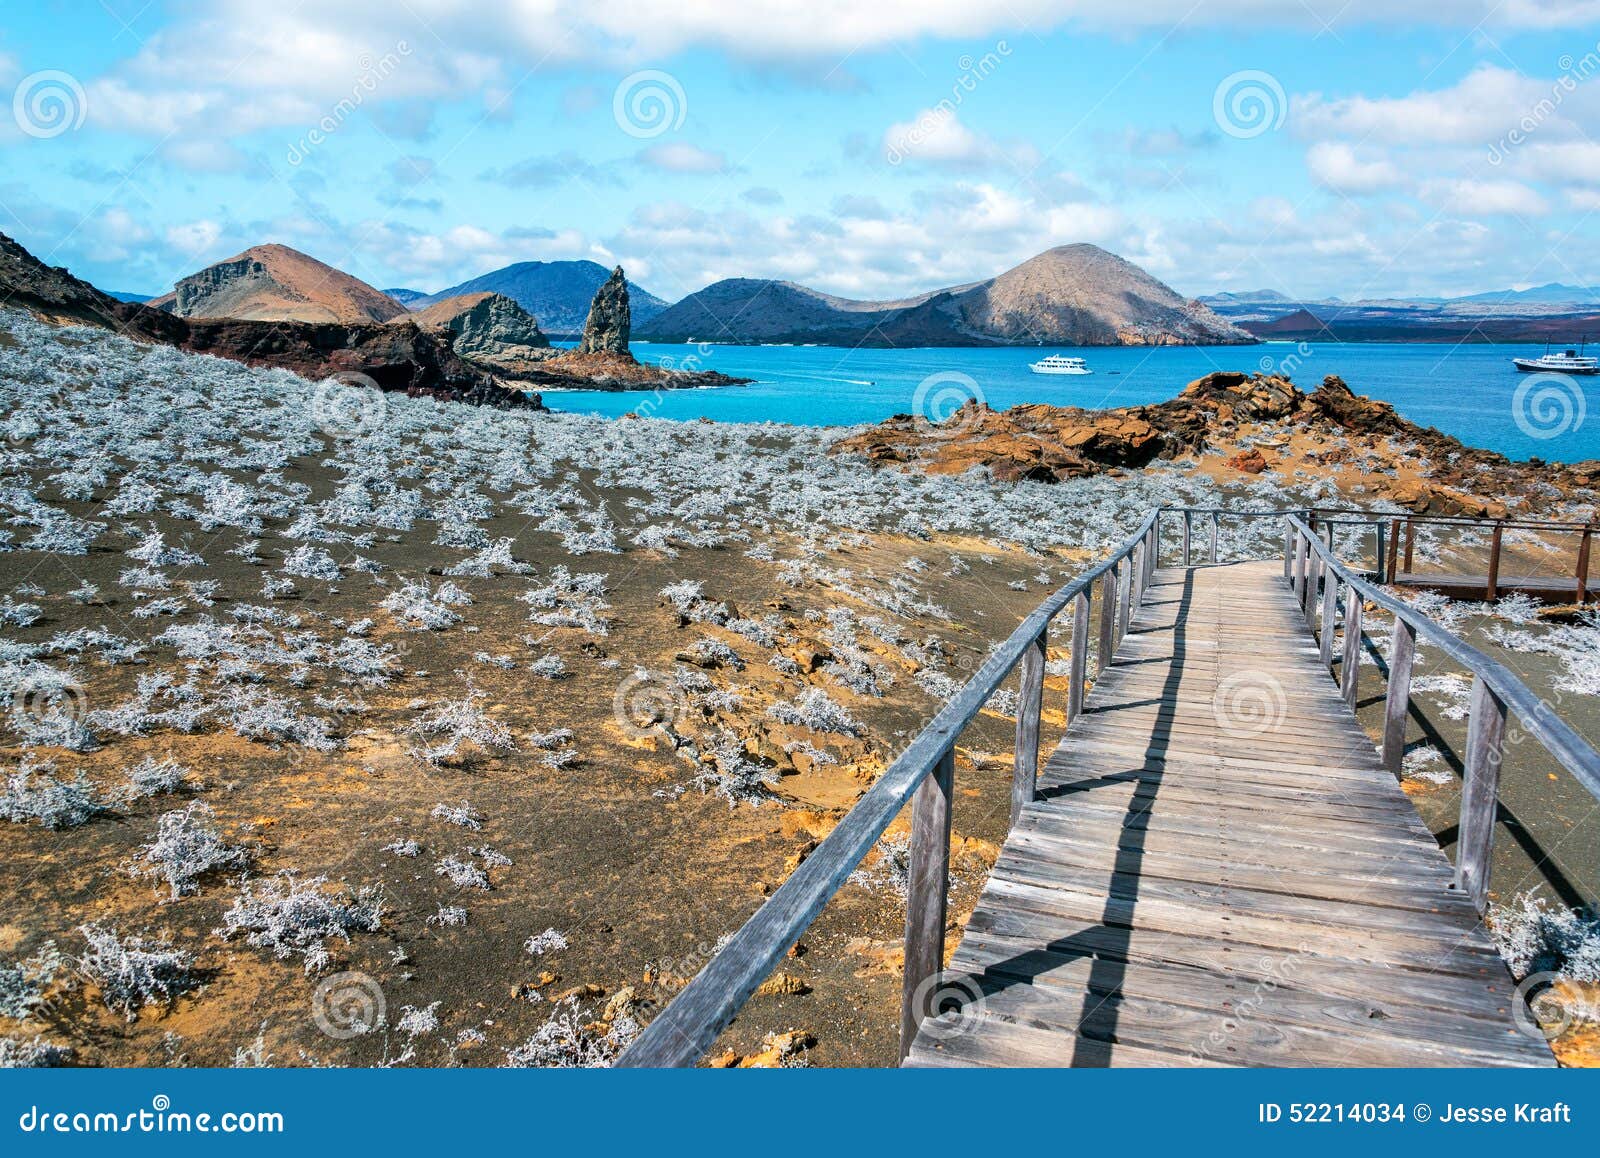 galapagos islands view